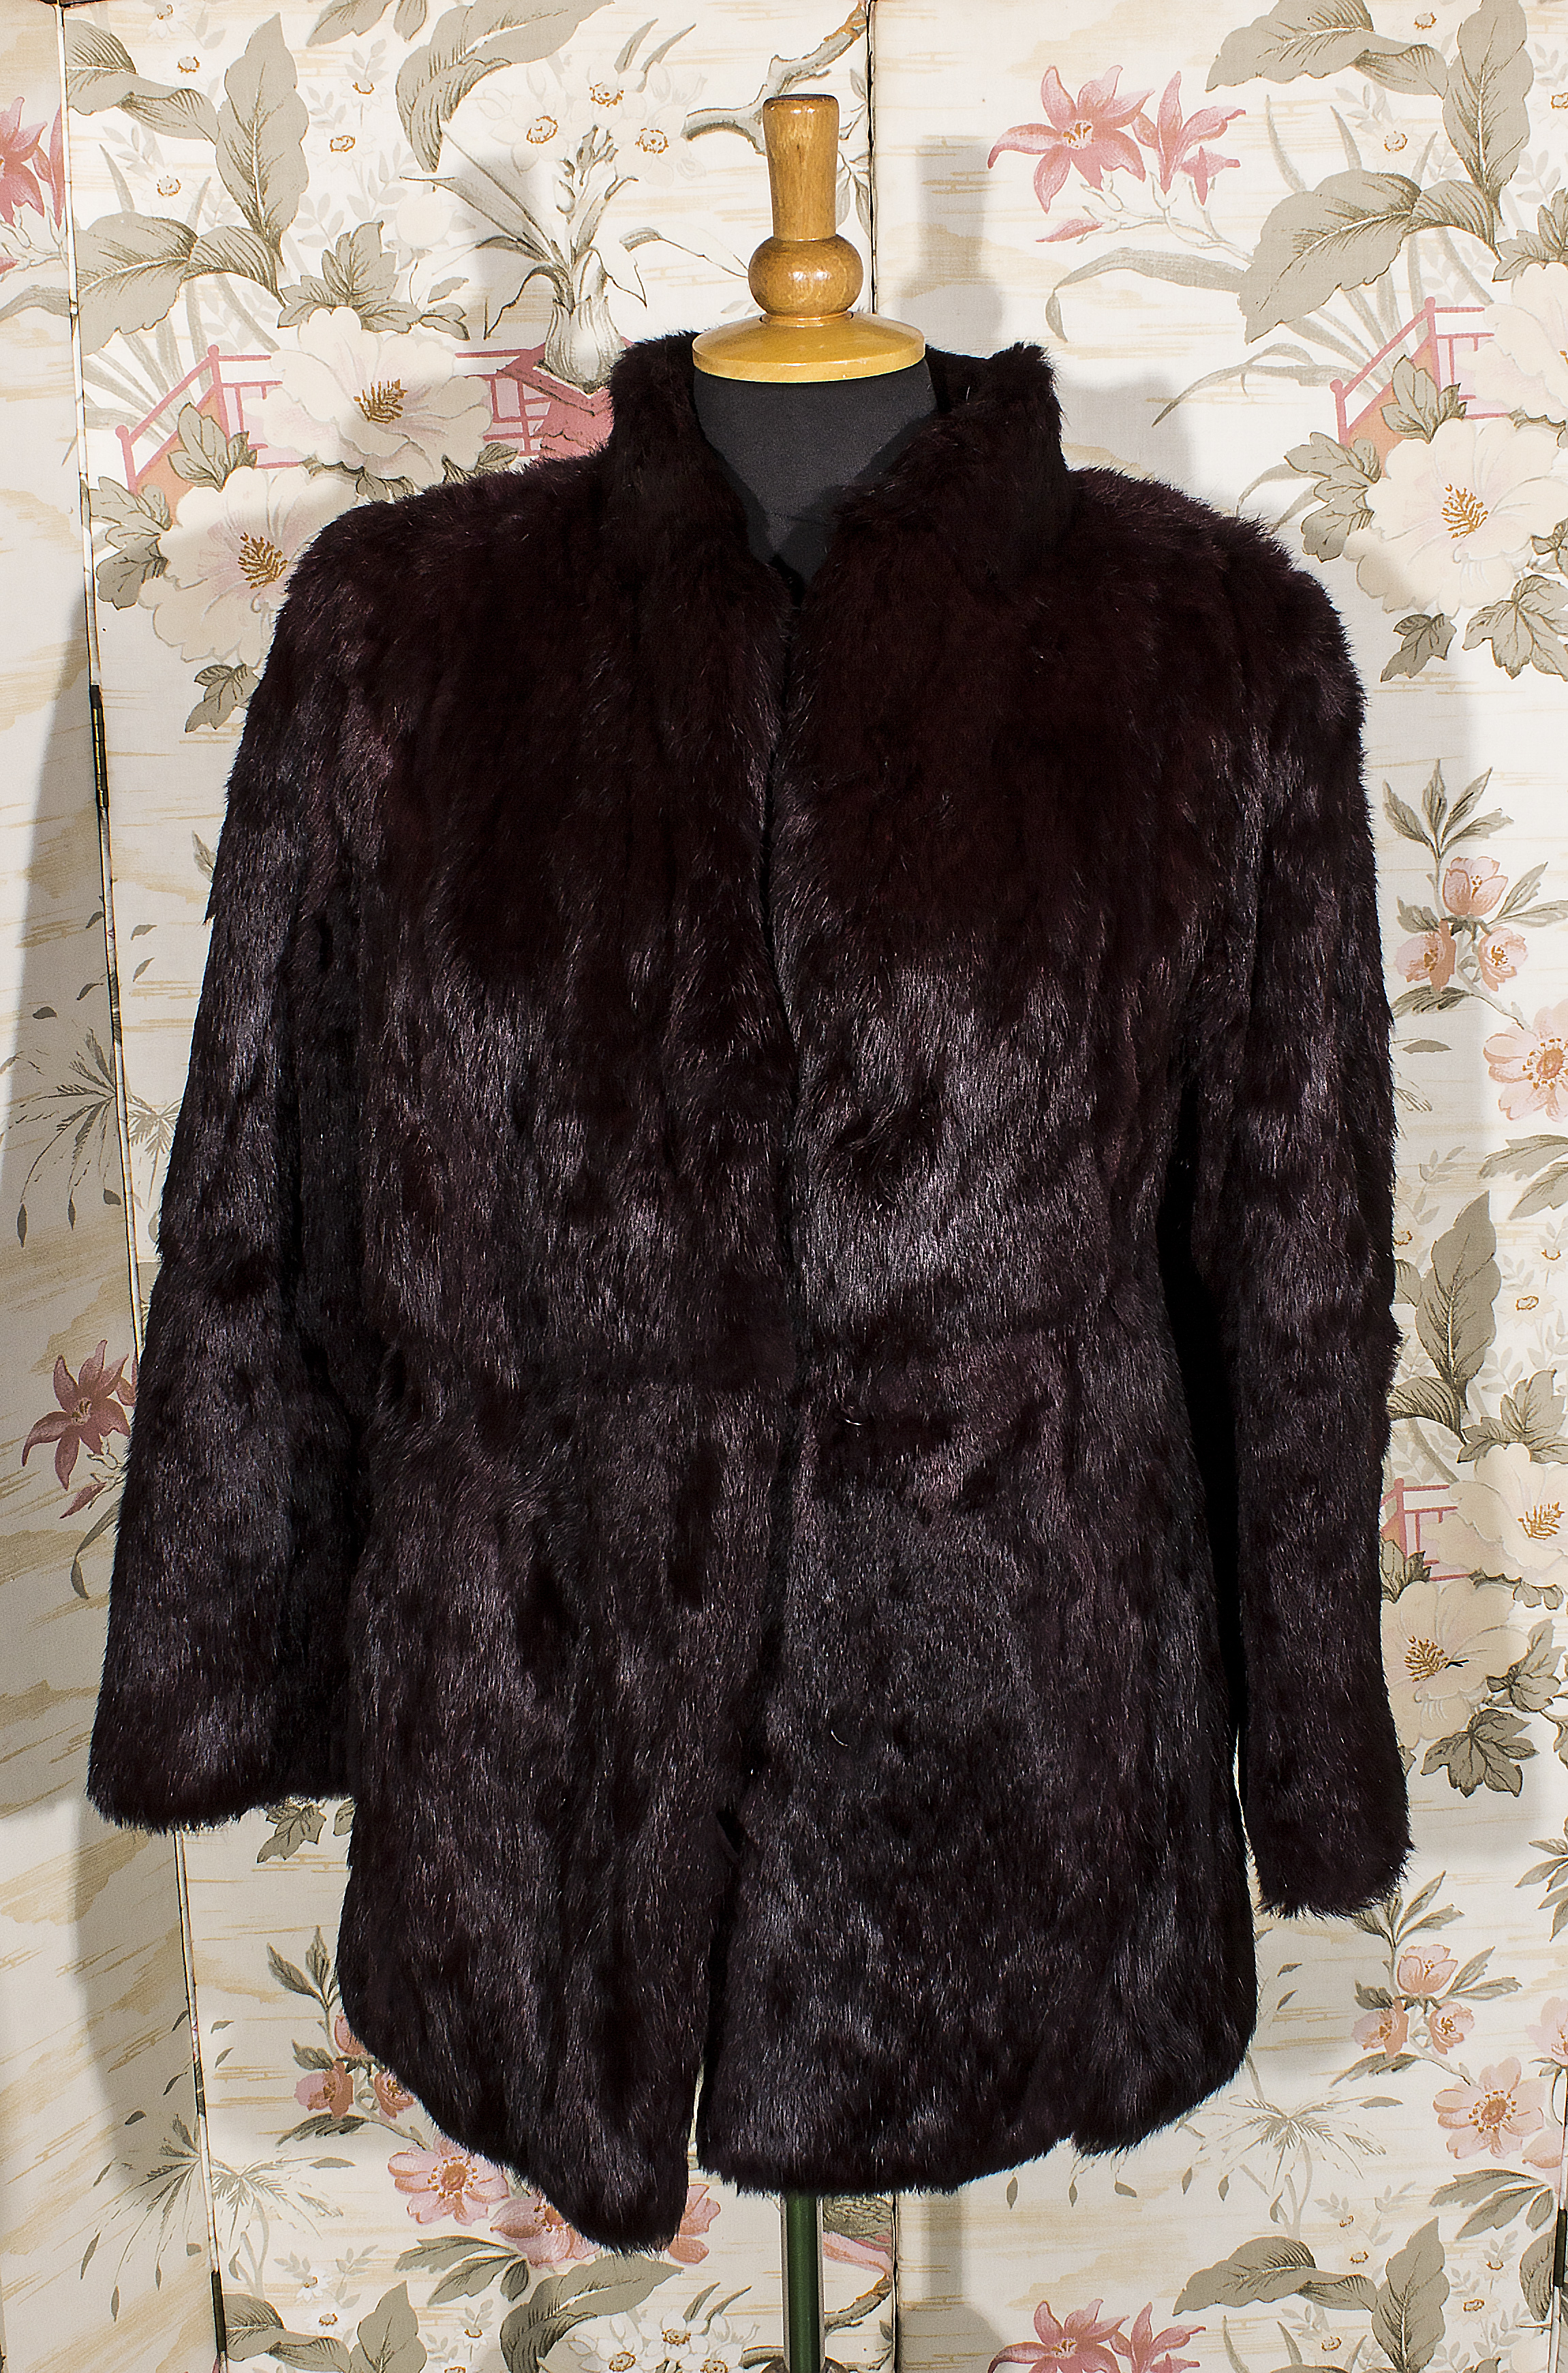 A lady's vintage fur jacket